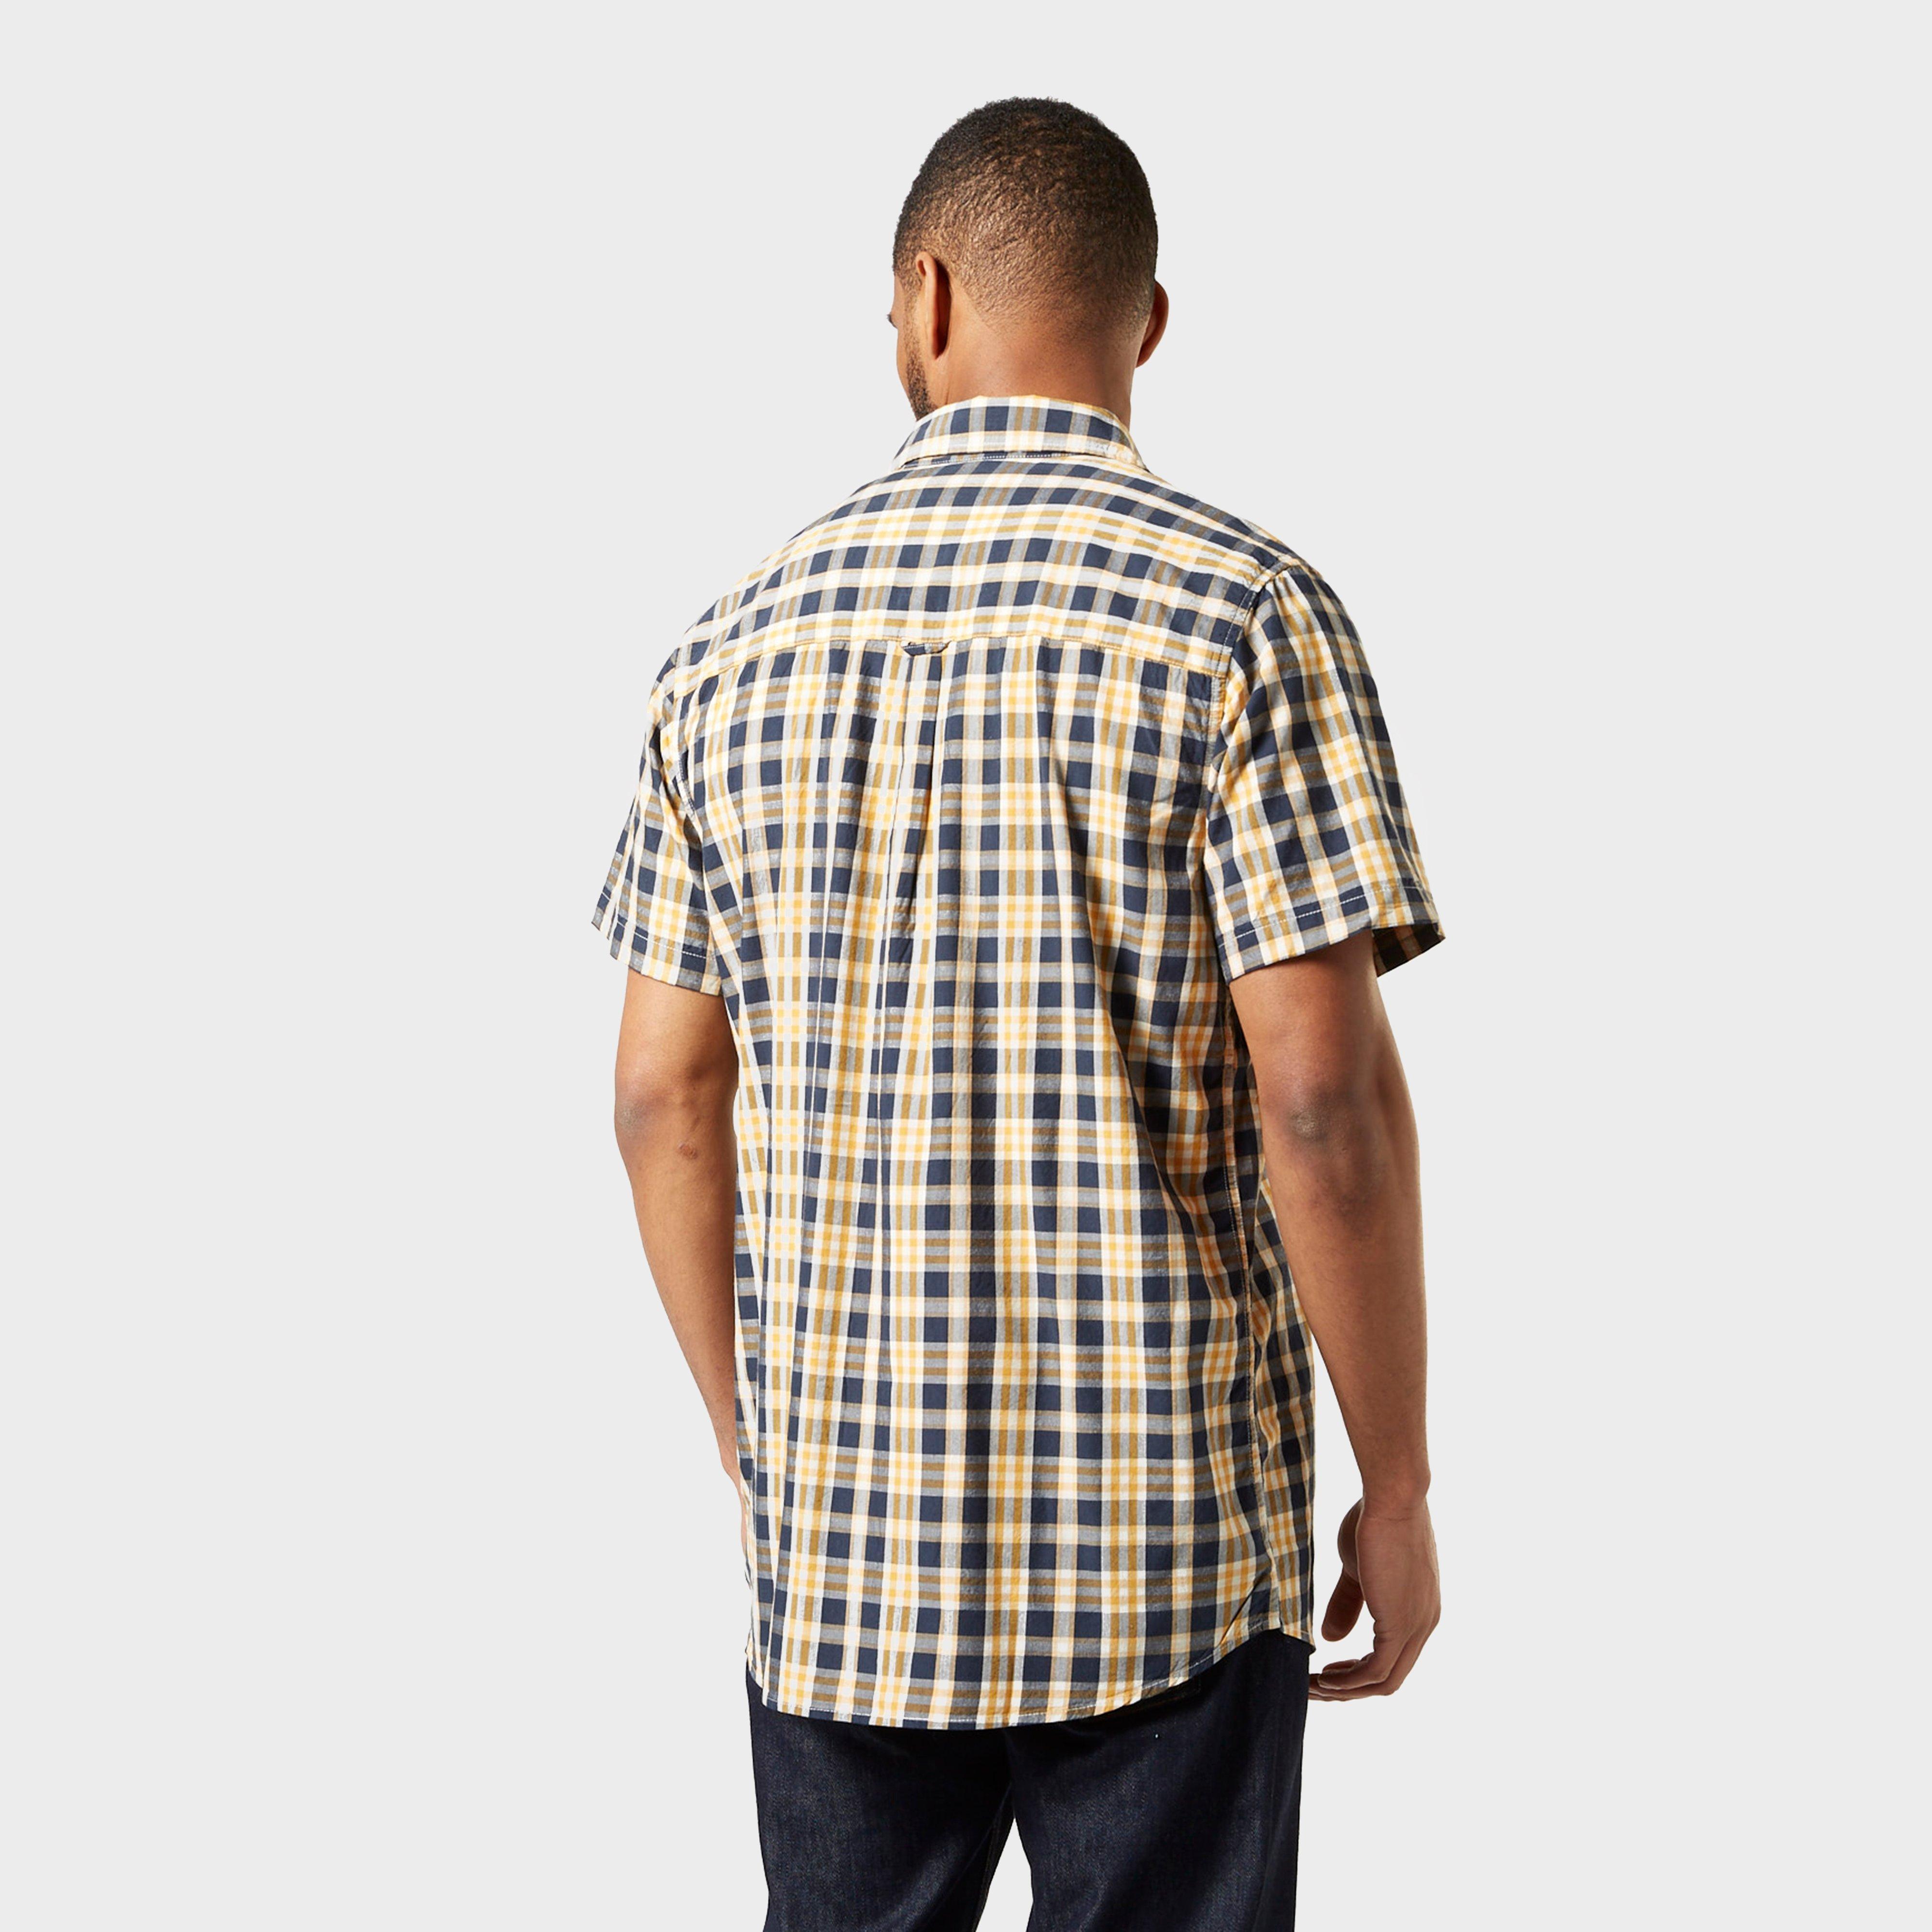 Craghoppers Men's Jose Short Sleeved Check Shirt Review